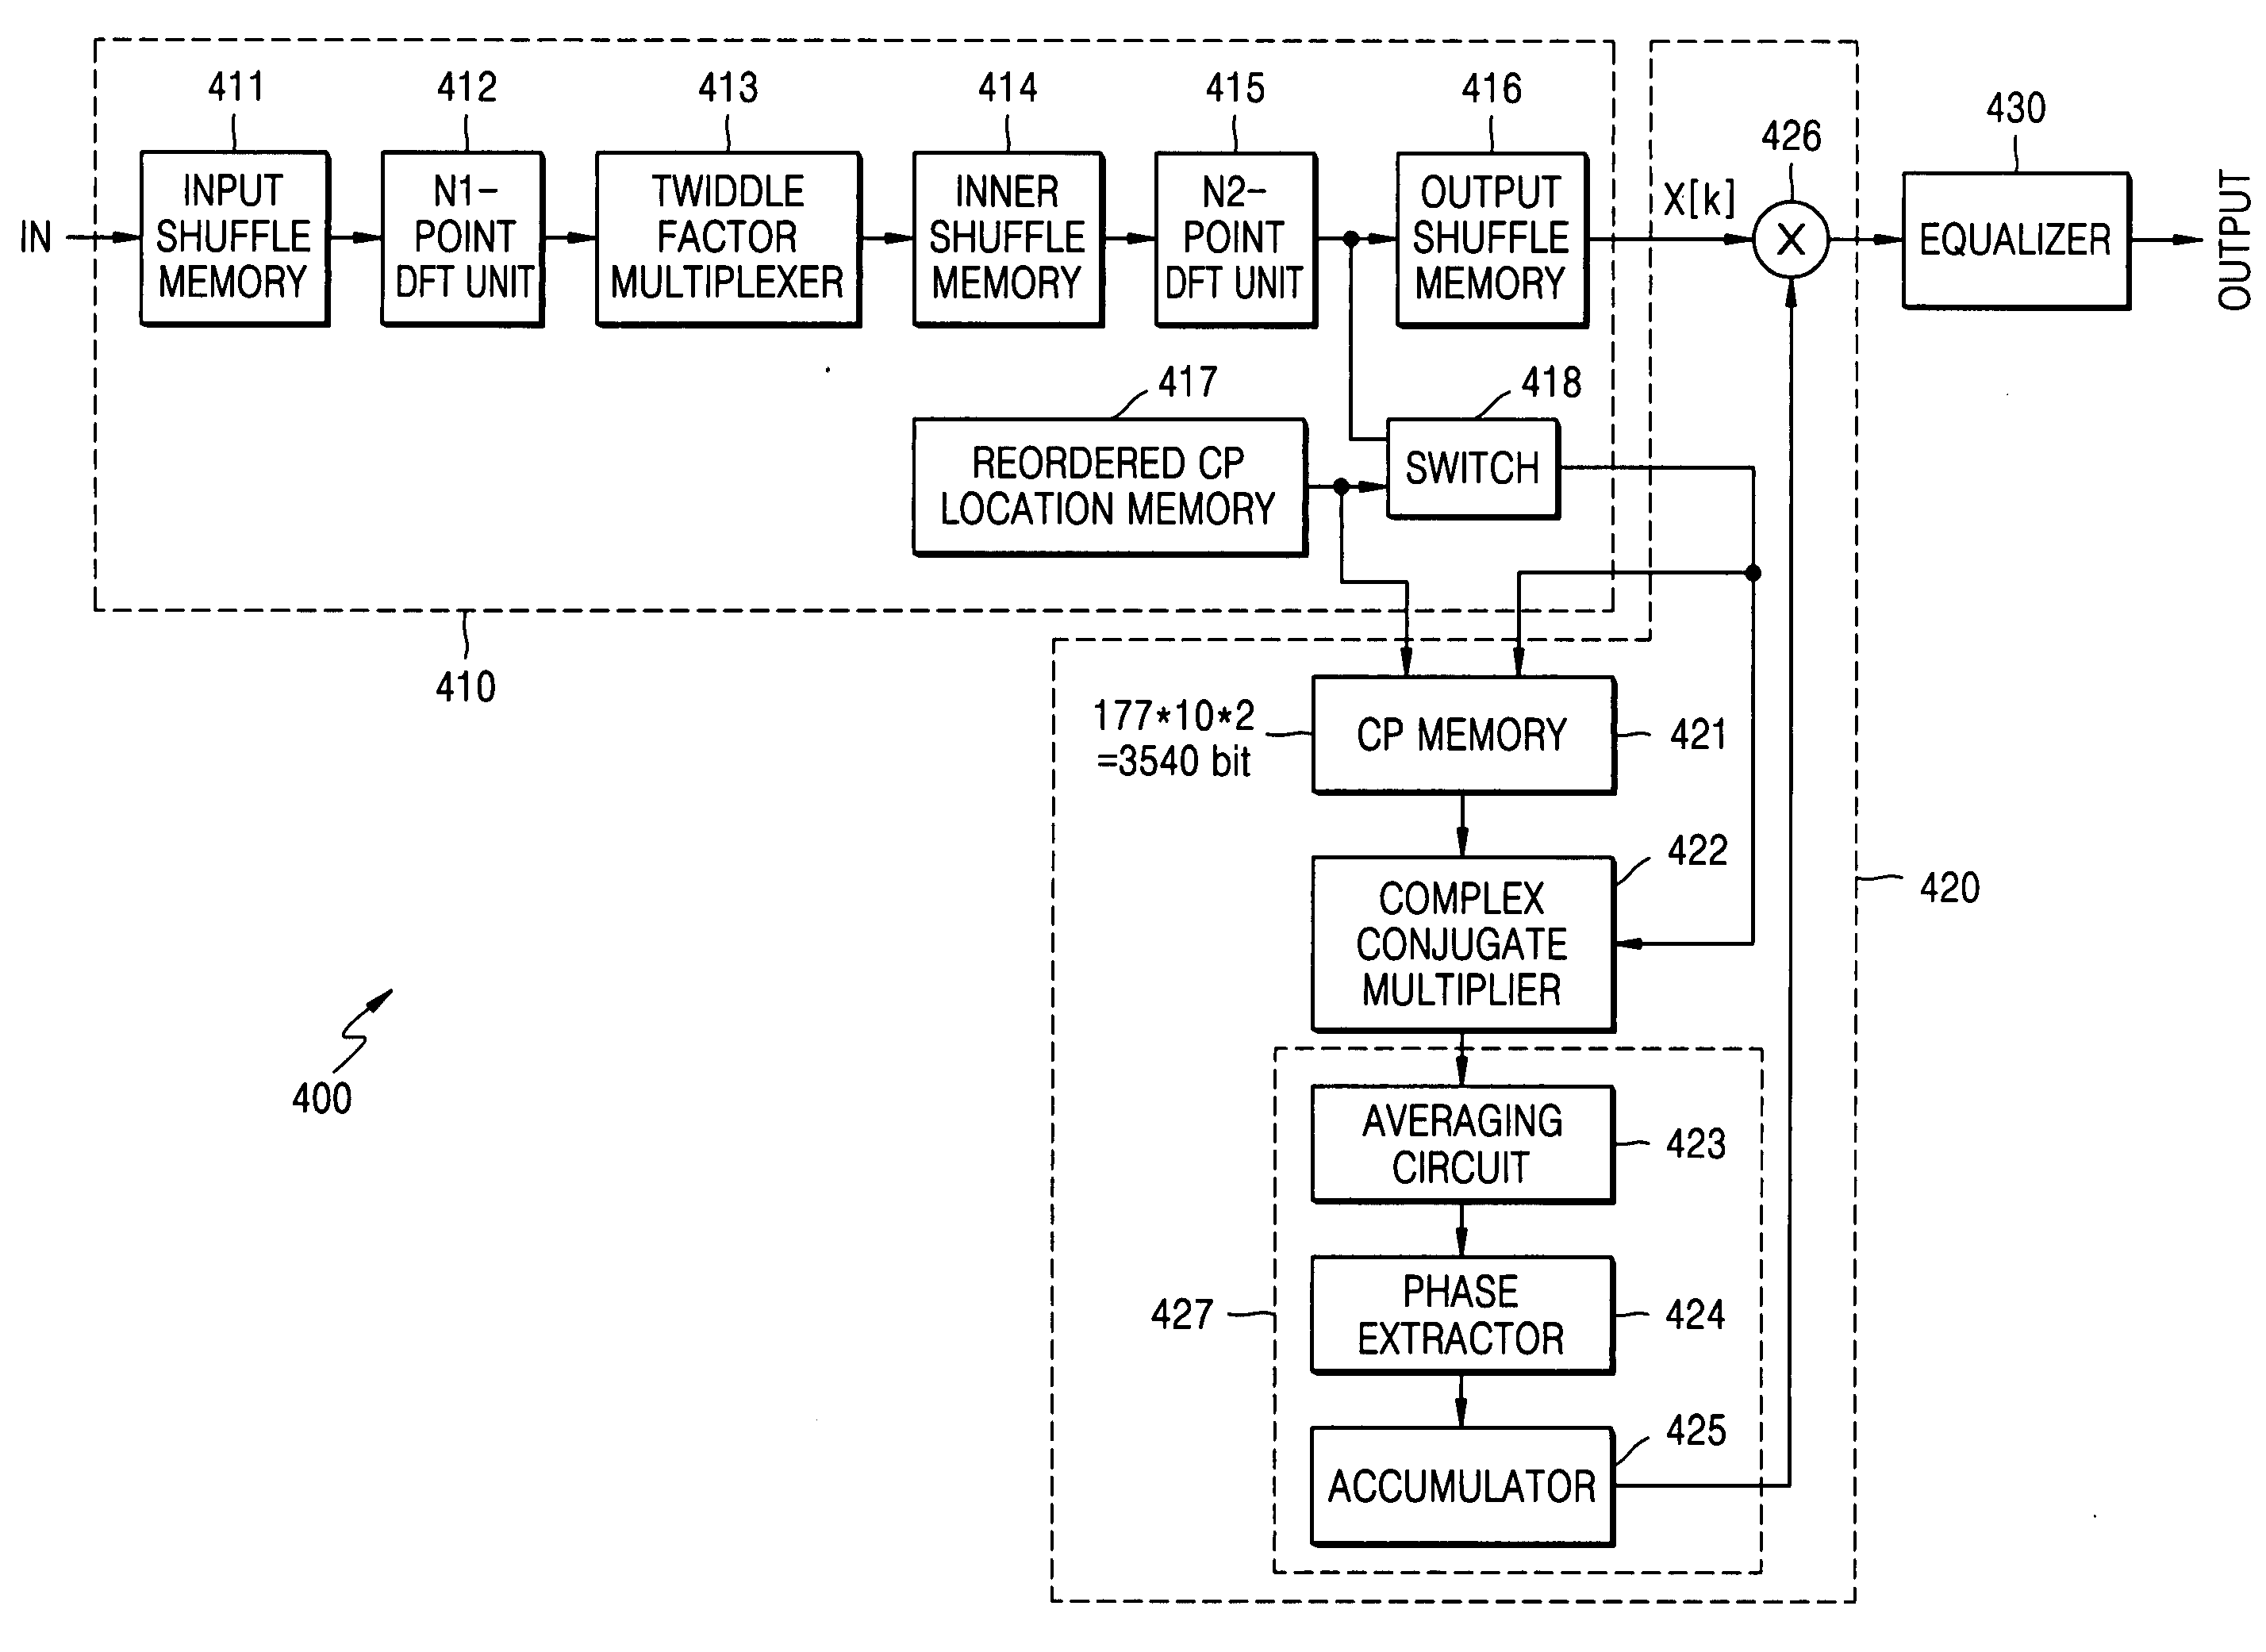 Apparatus, method and computer program for correcting common phase error of OFDM signal symbols